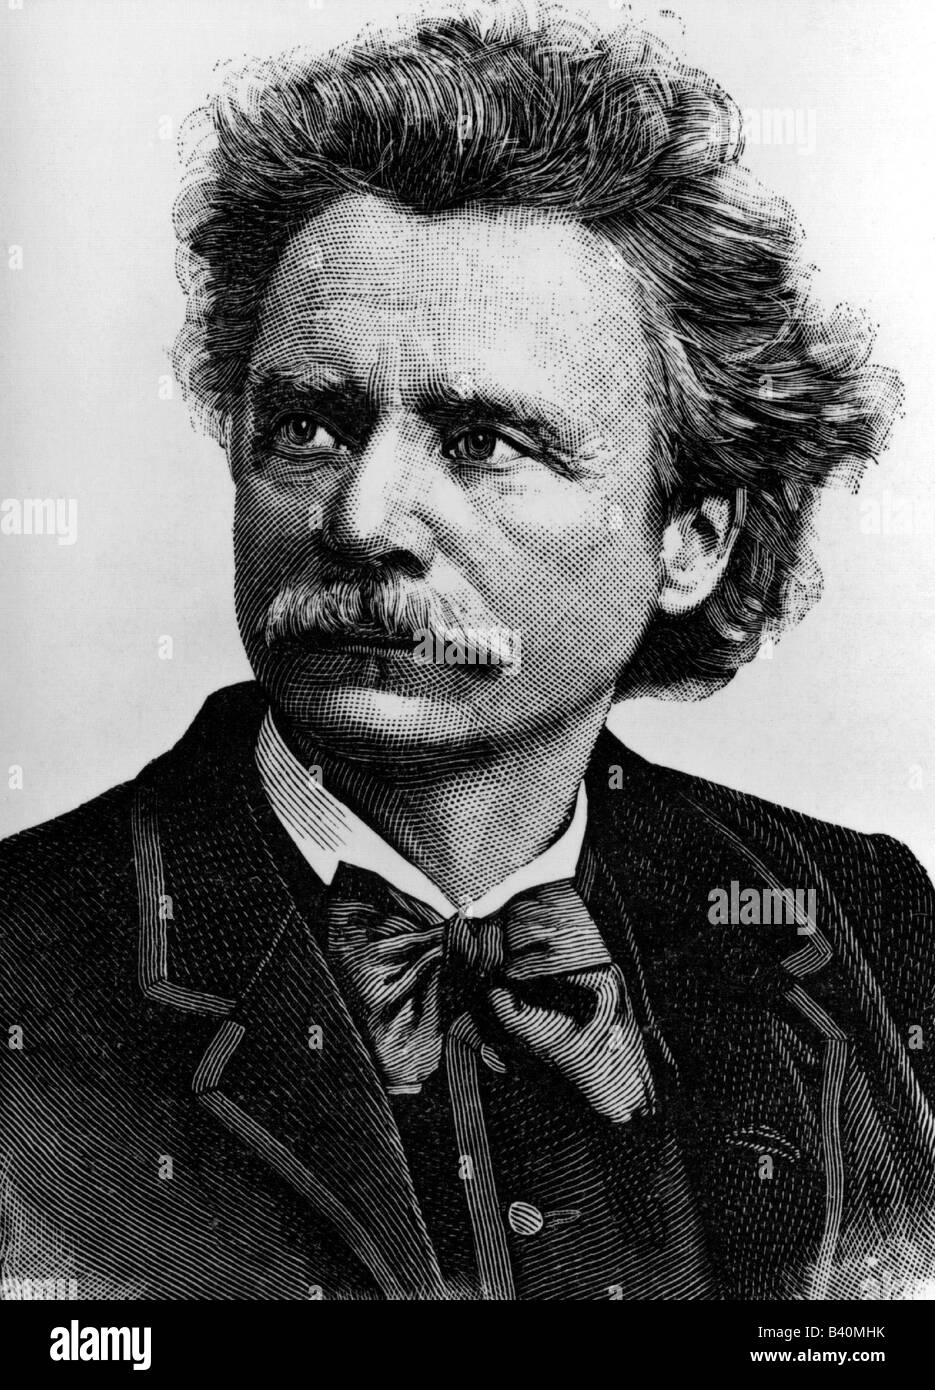 Grieg, Edvard, 15.6.1843 - 4.9.1907, Norwegian composer, portrait, xylographie, 19th century, Stock Photo